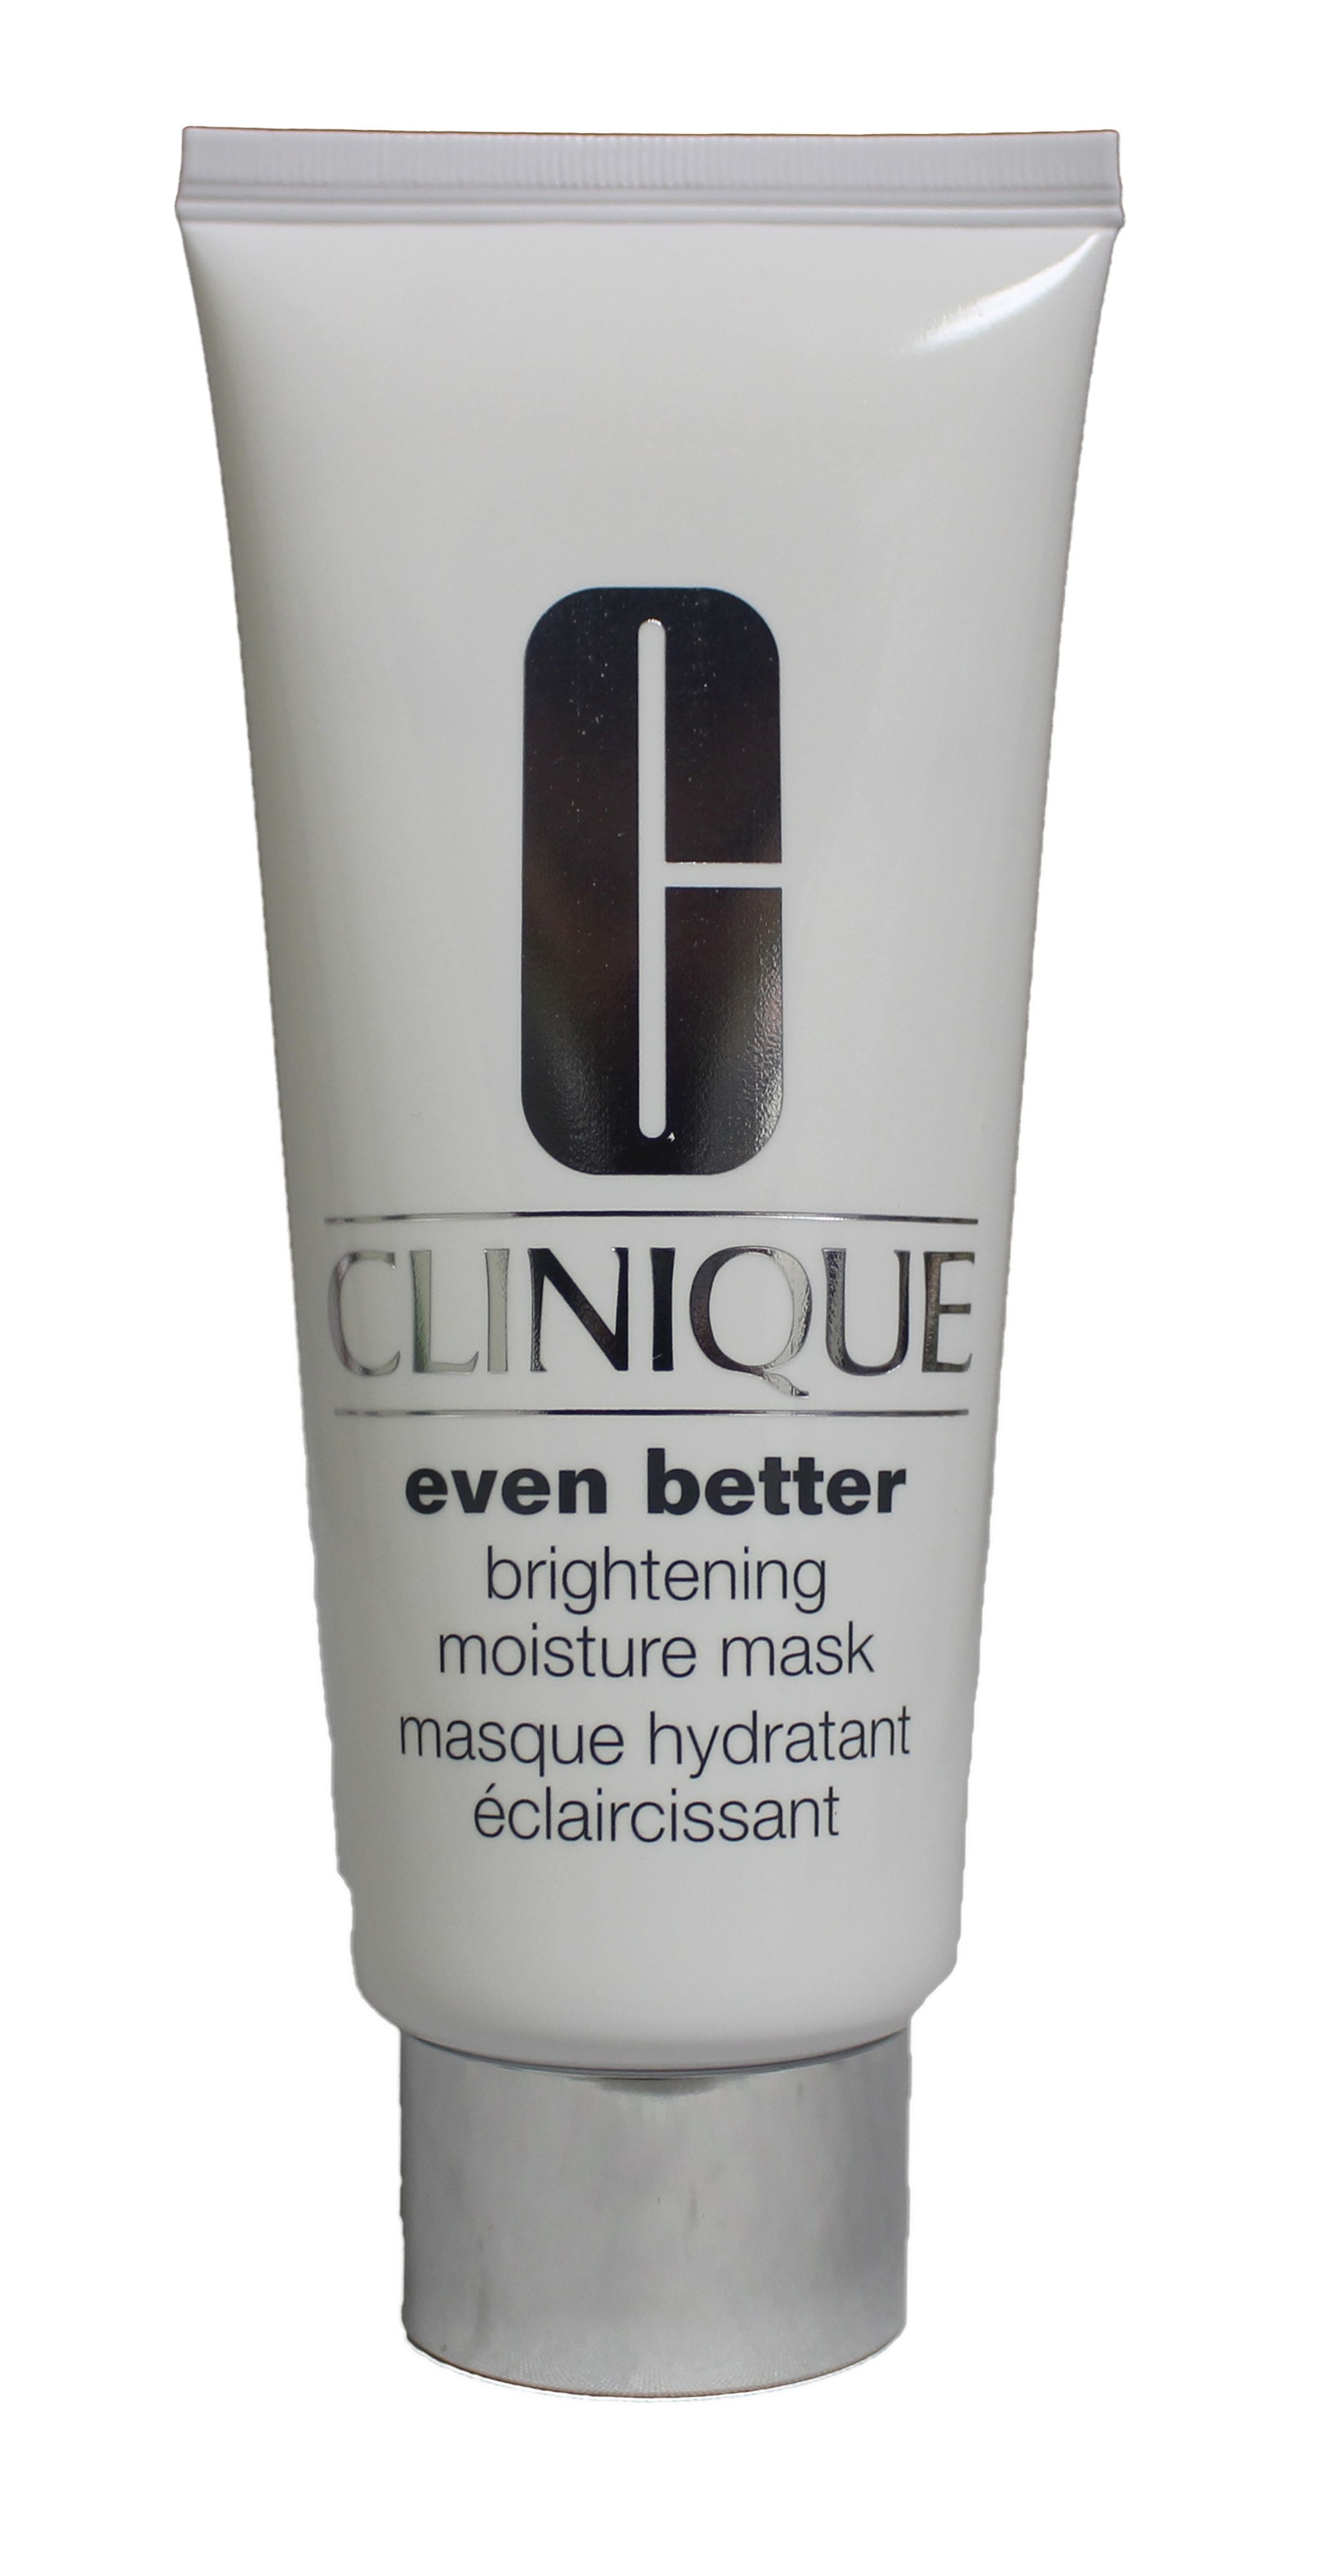 vedvarende ressource annoncere bestikke Clinique Even Better Brightening Moisture Face Mask, 3.4 Ounce - Walmart.com